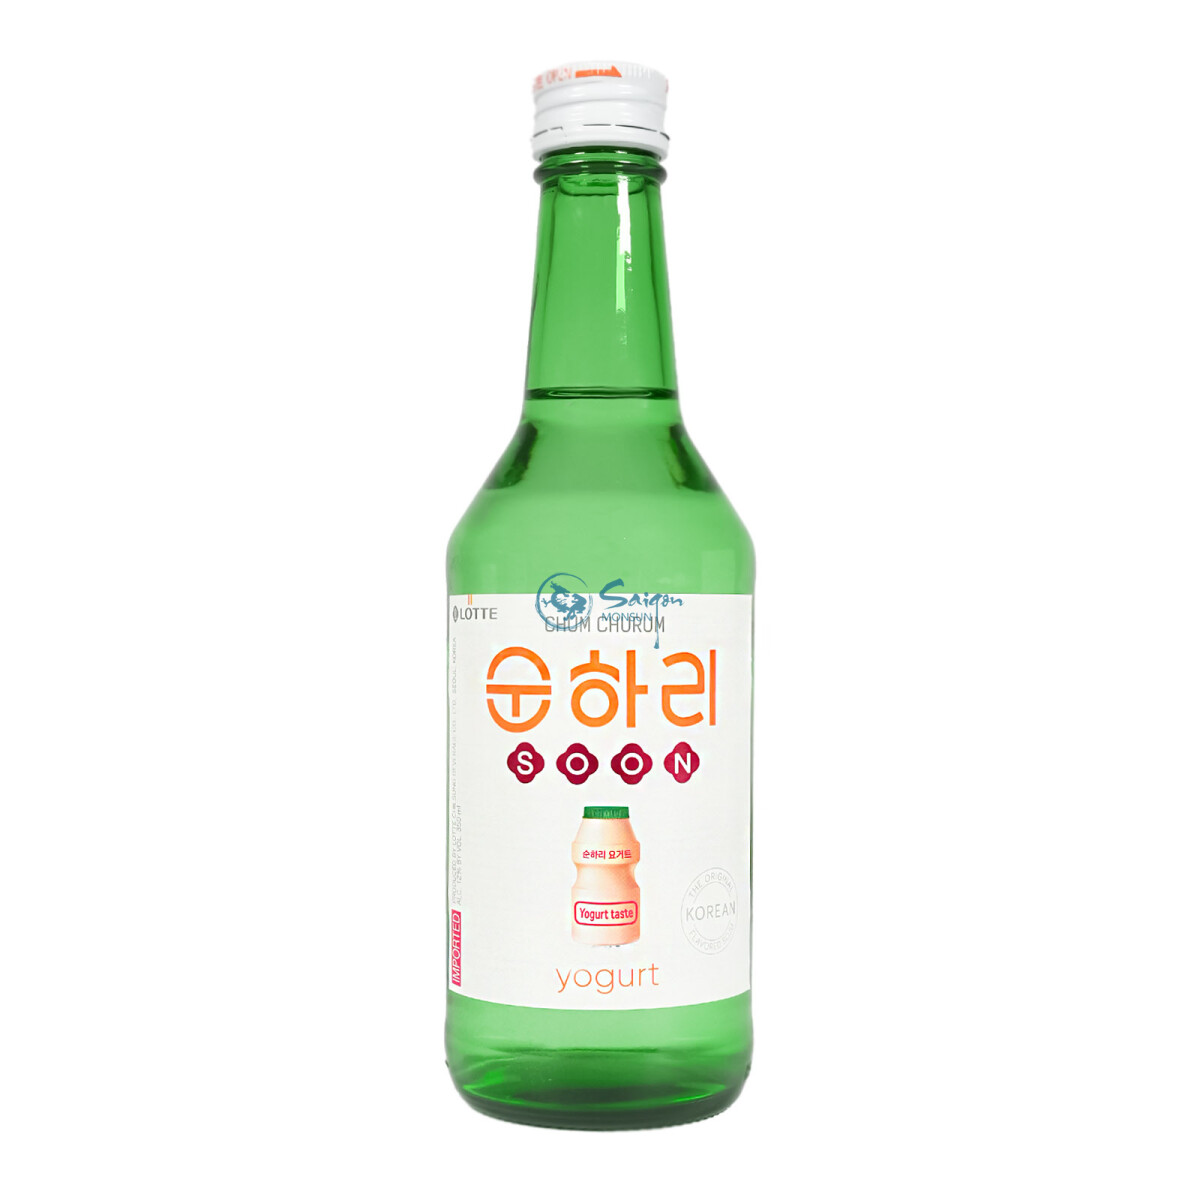 Lotte Chum Churum Soju Yogurt 6x360ml 12% alk.